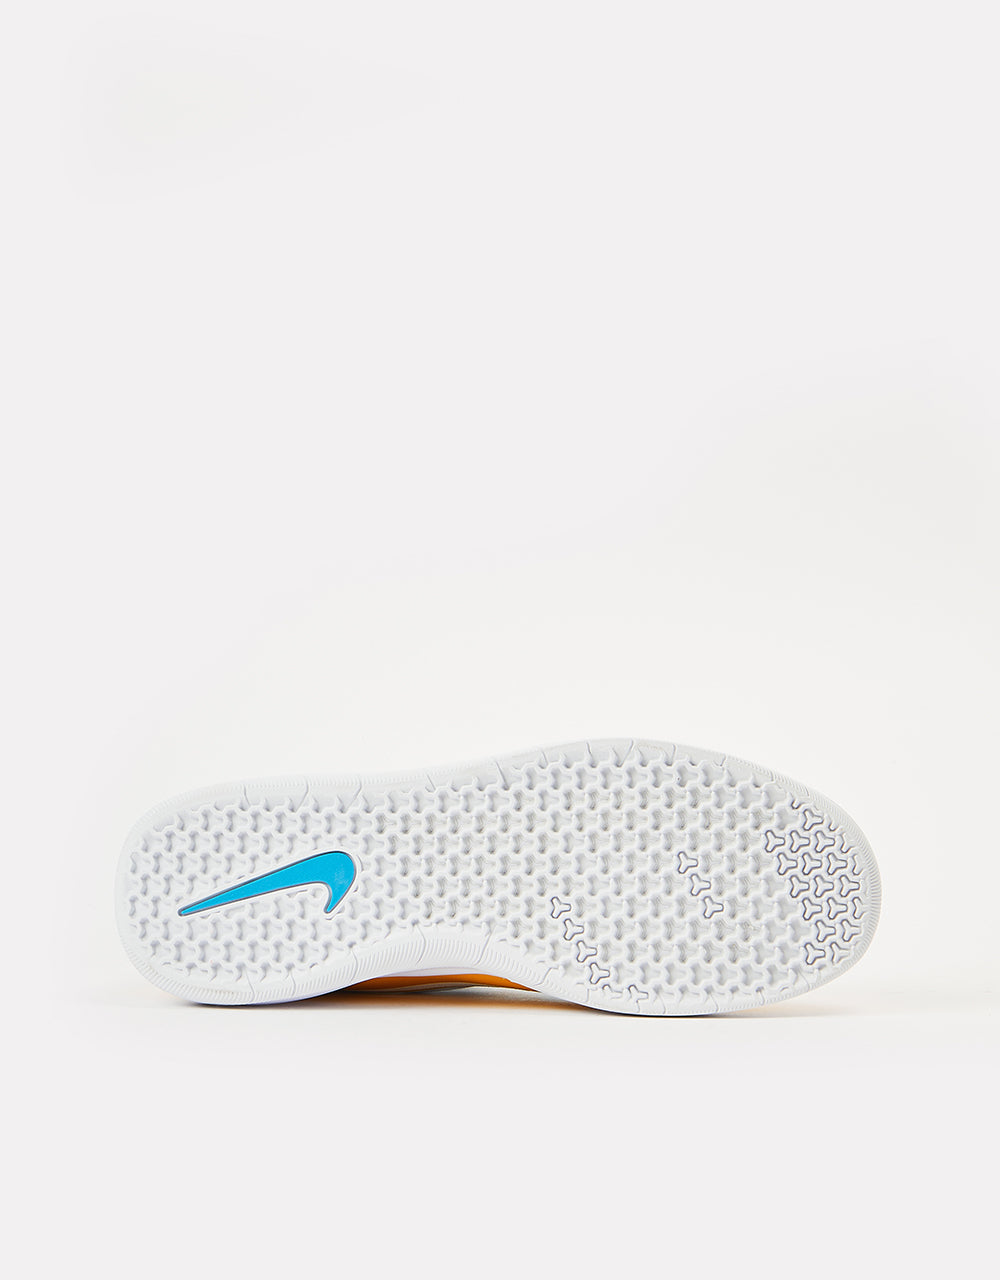 Nike SB Nyjah Free 2 Skate Shoes - Dark Sulfur/White-Laser Blue